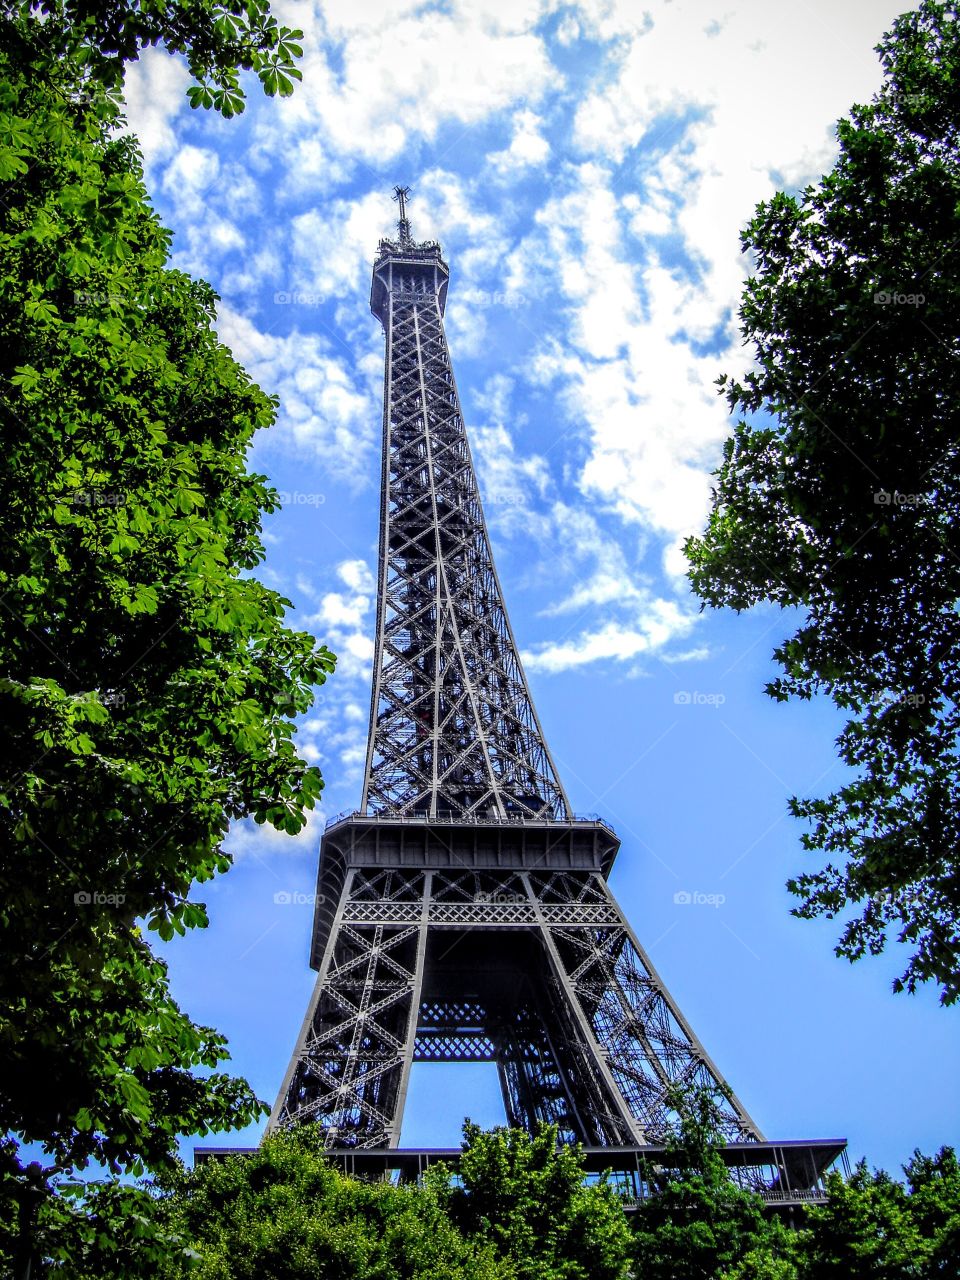 The Eiffel Tower, Paris, FRA